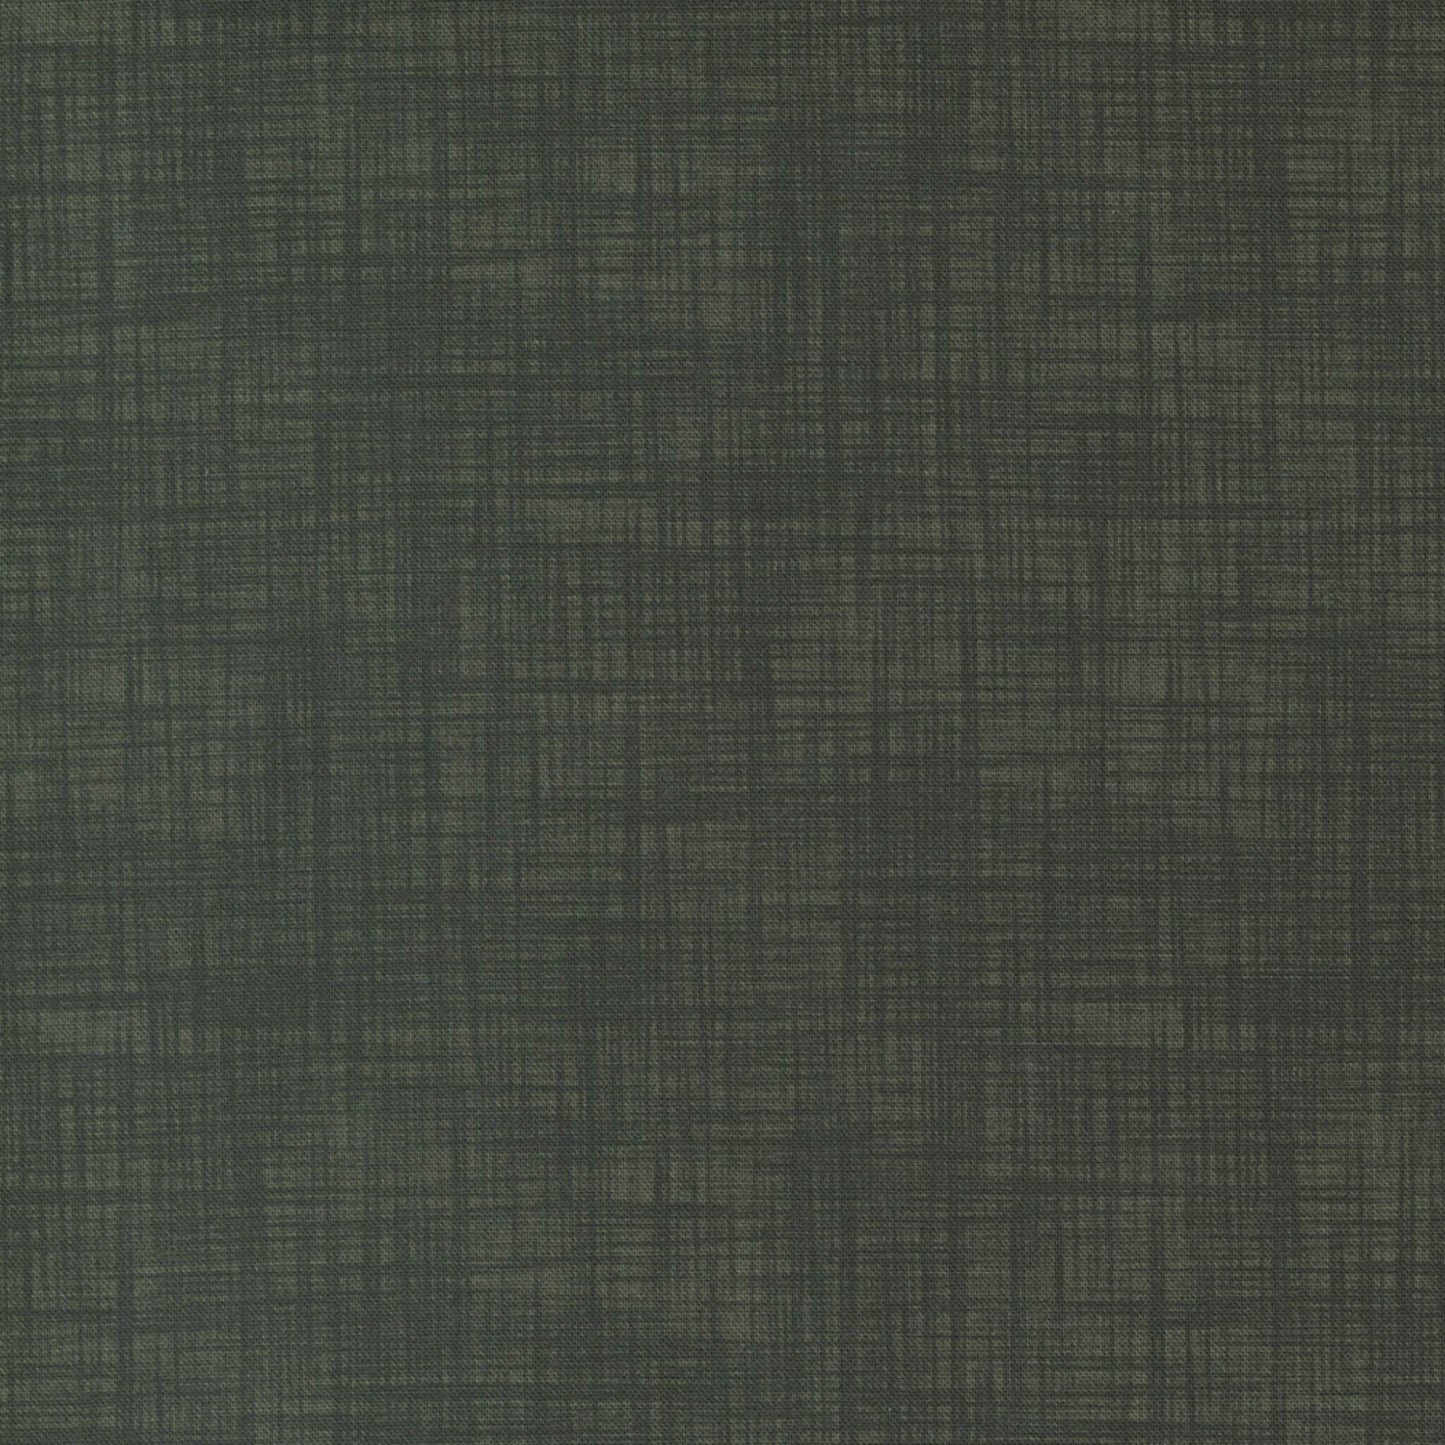 Loden Green - Wild Iris Fabric Range by Holly Taylor for Moda Fabrics